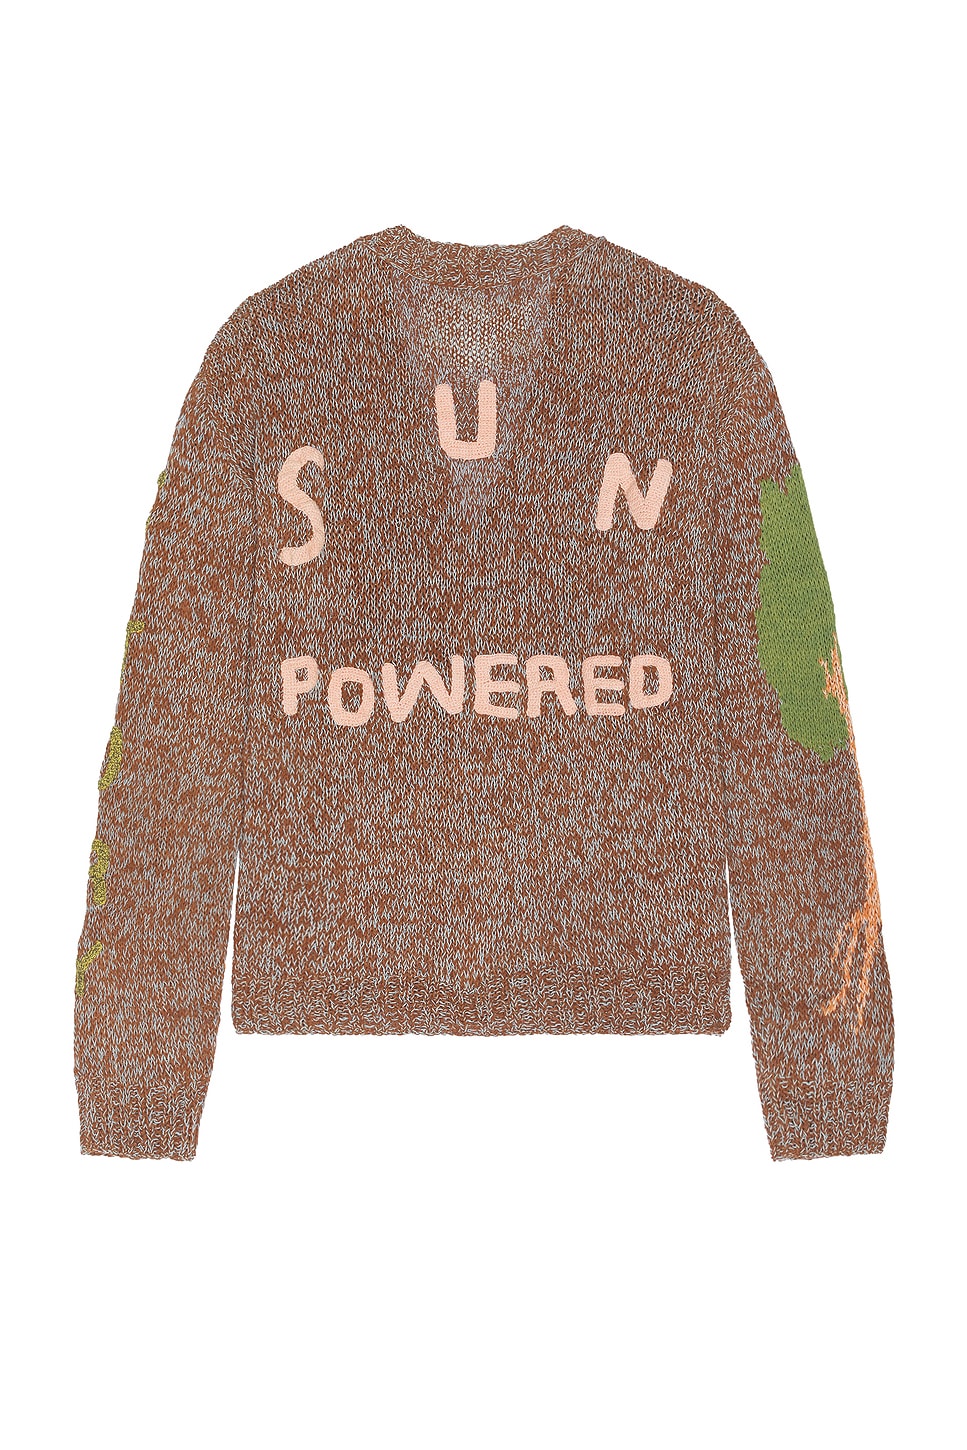 Shop Story Mfg. Hand Knit Twinsun Cardigan In Brown Sun Powered